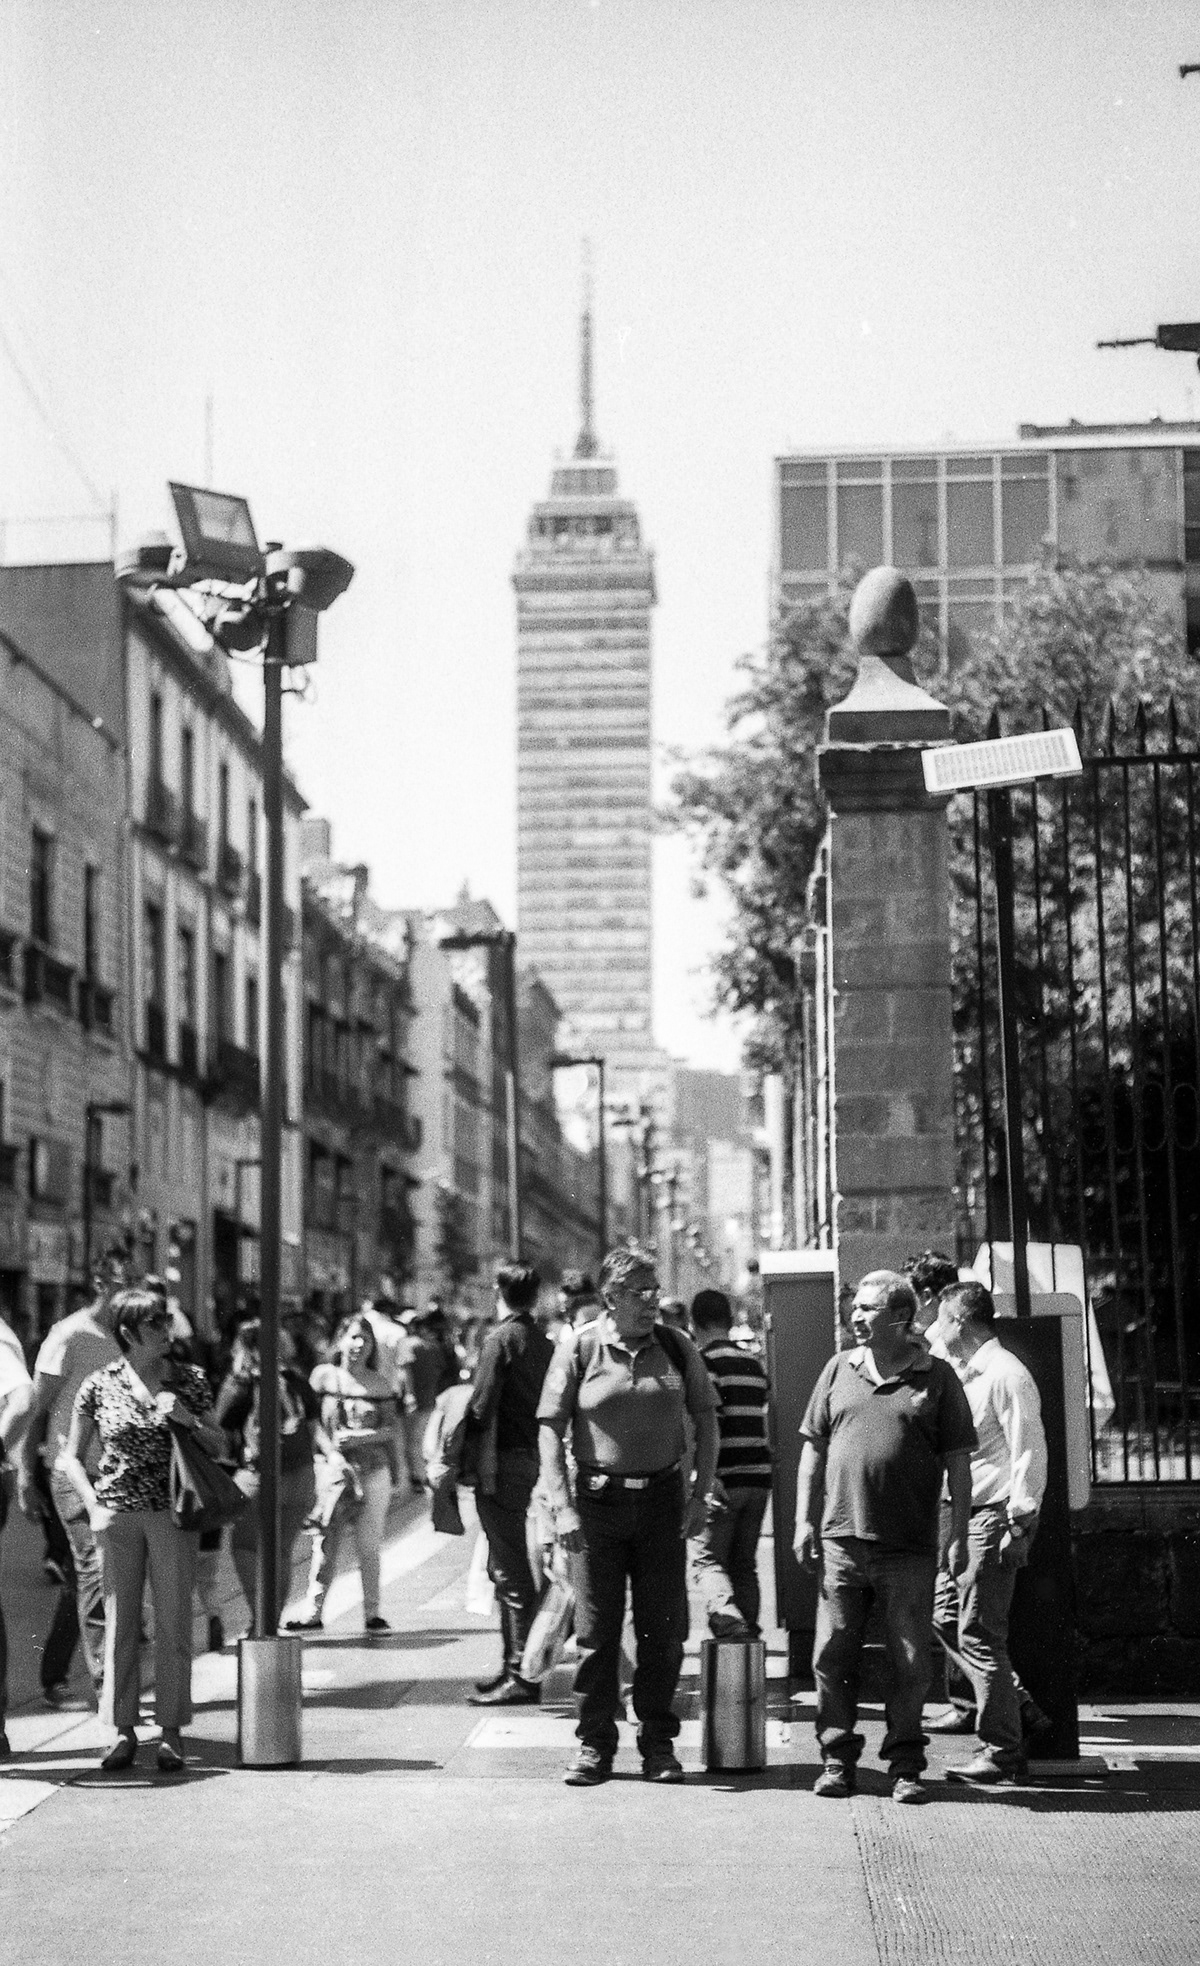 35mm analog analog photography black and white Film   film photography kodak mexico city street photography Urban